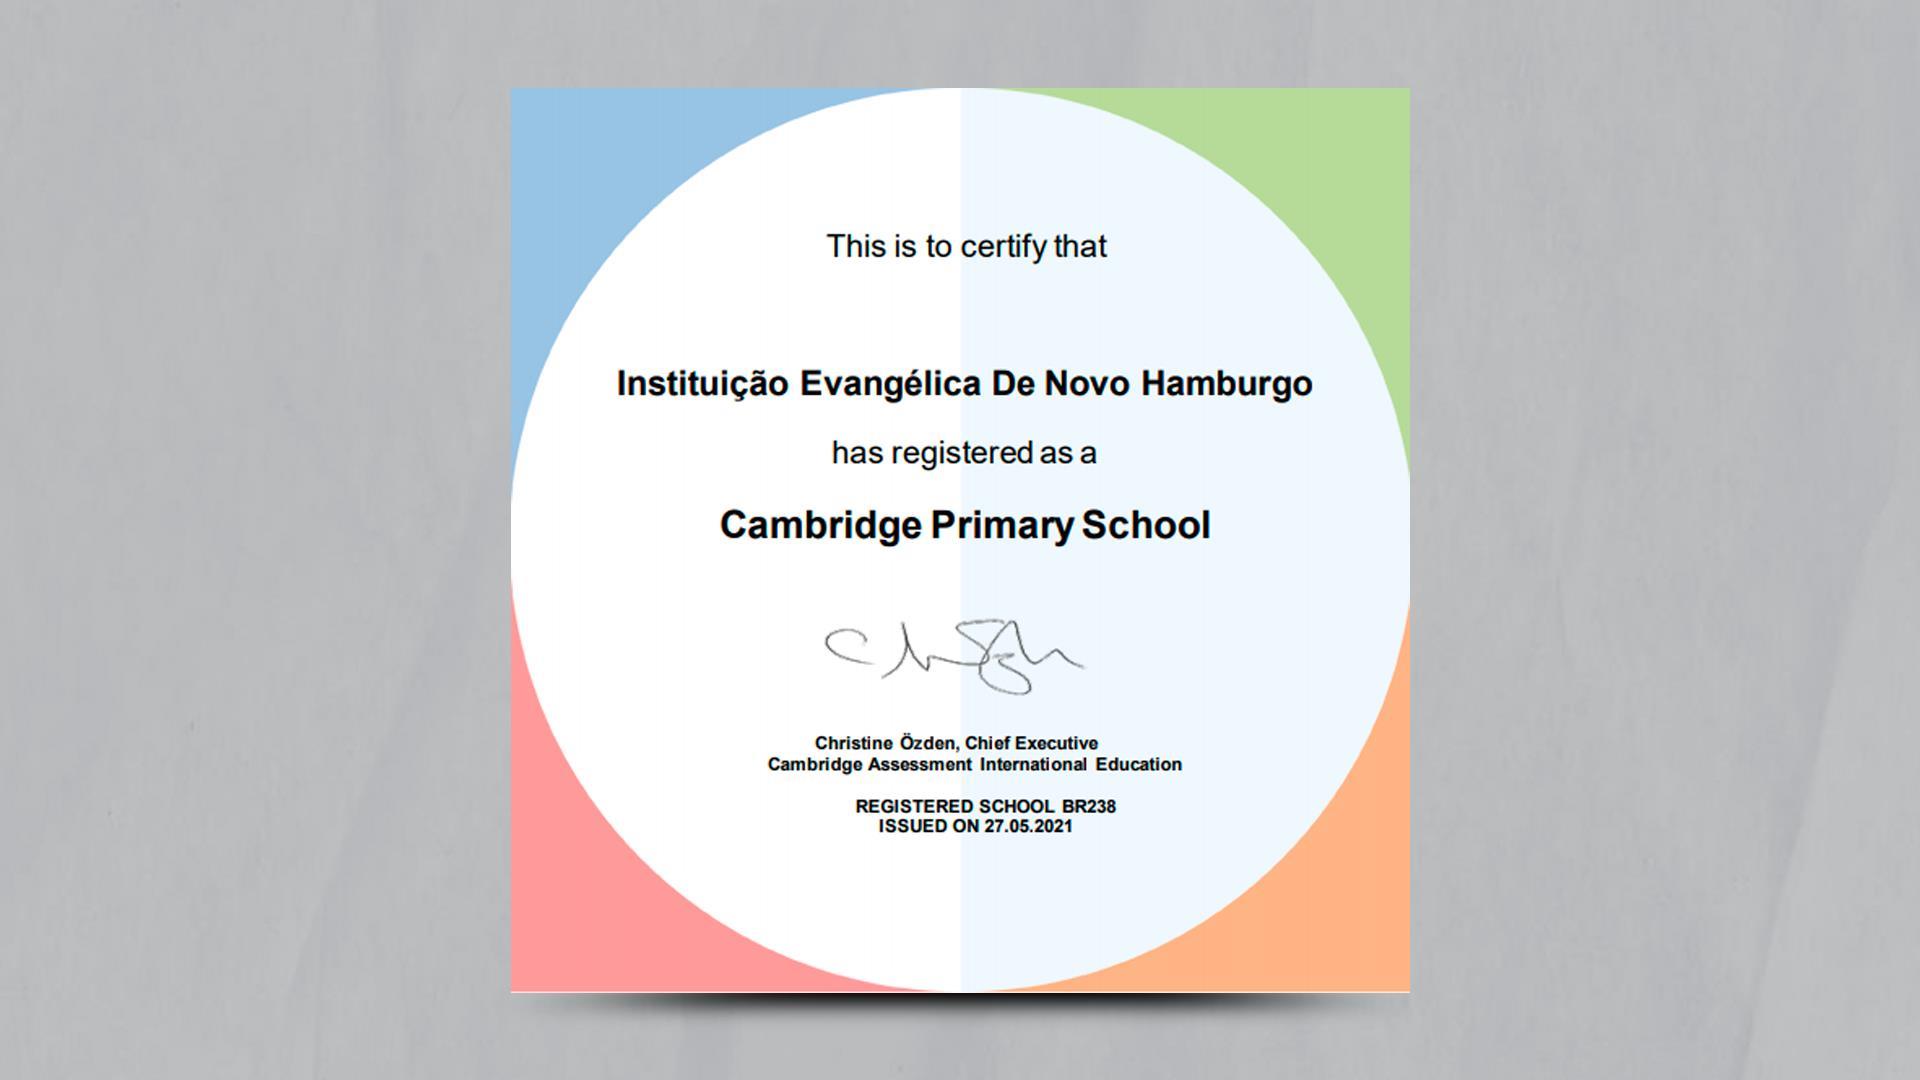 Certificado de Cambridge Primary School é recebido pela IENH